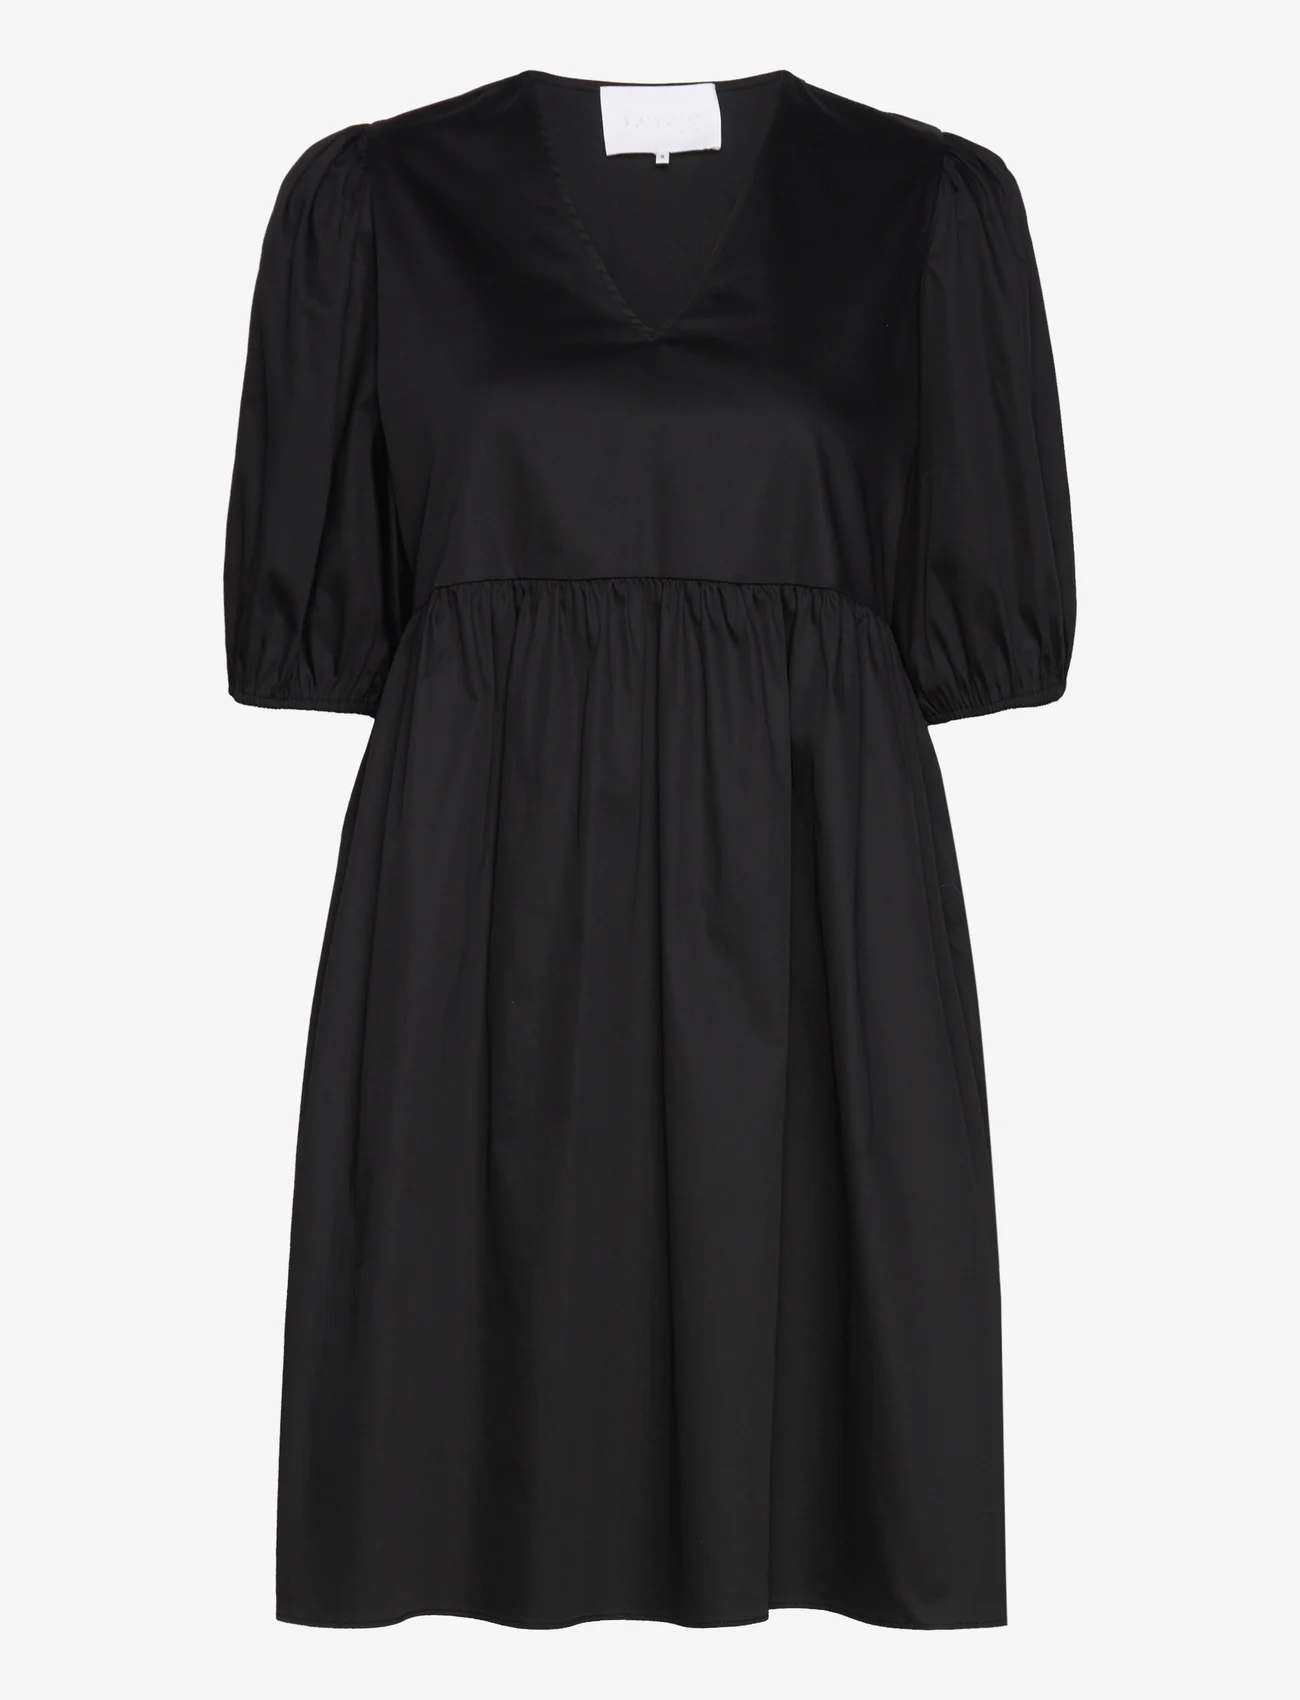 Levete Room - LR-ISLA SOLID - krótkie sukienki - l999 - black - 0